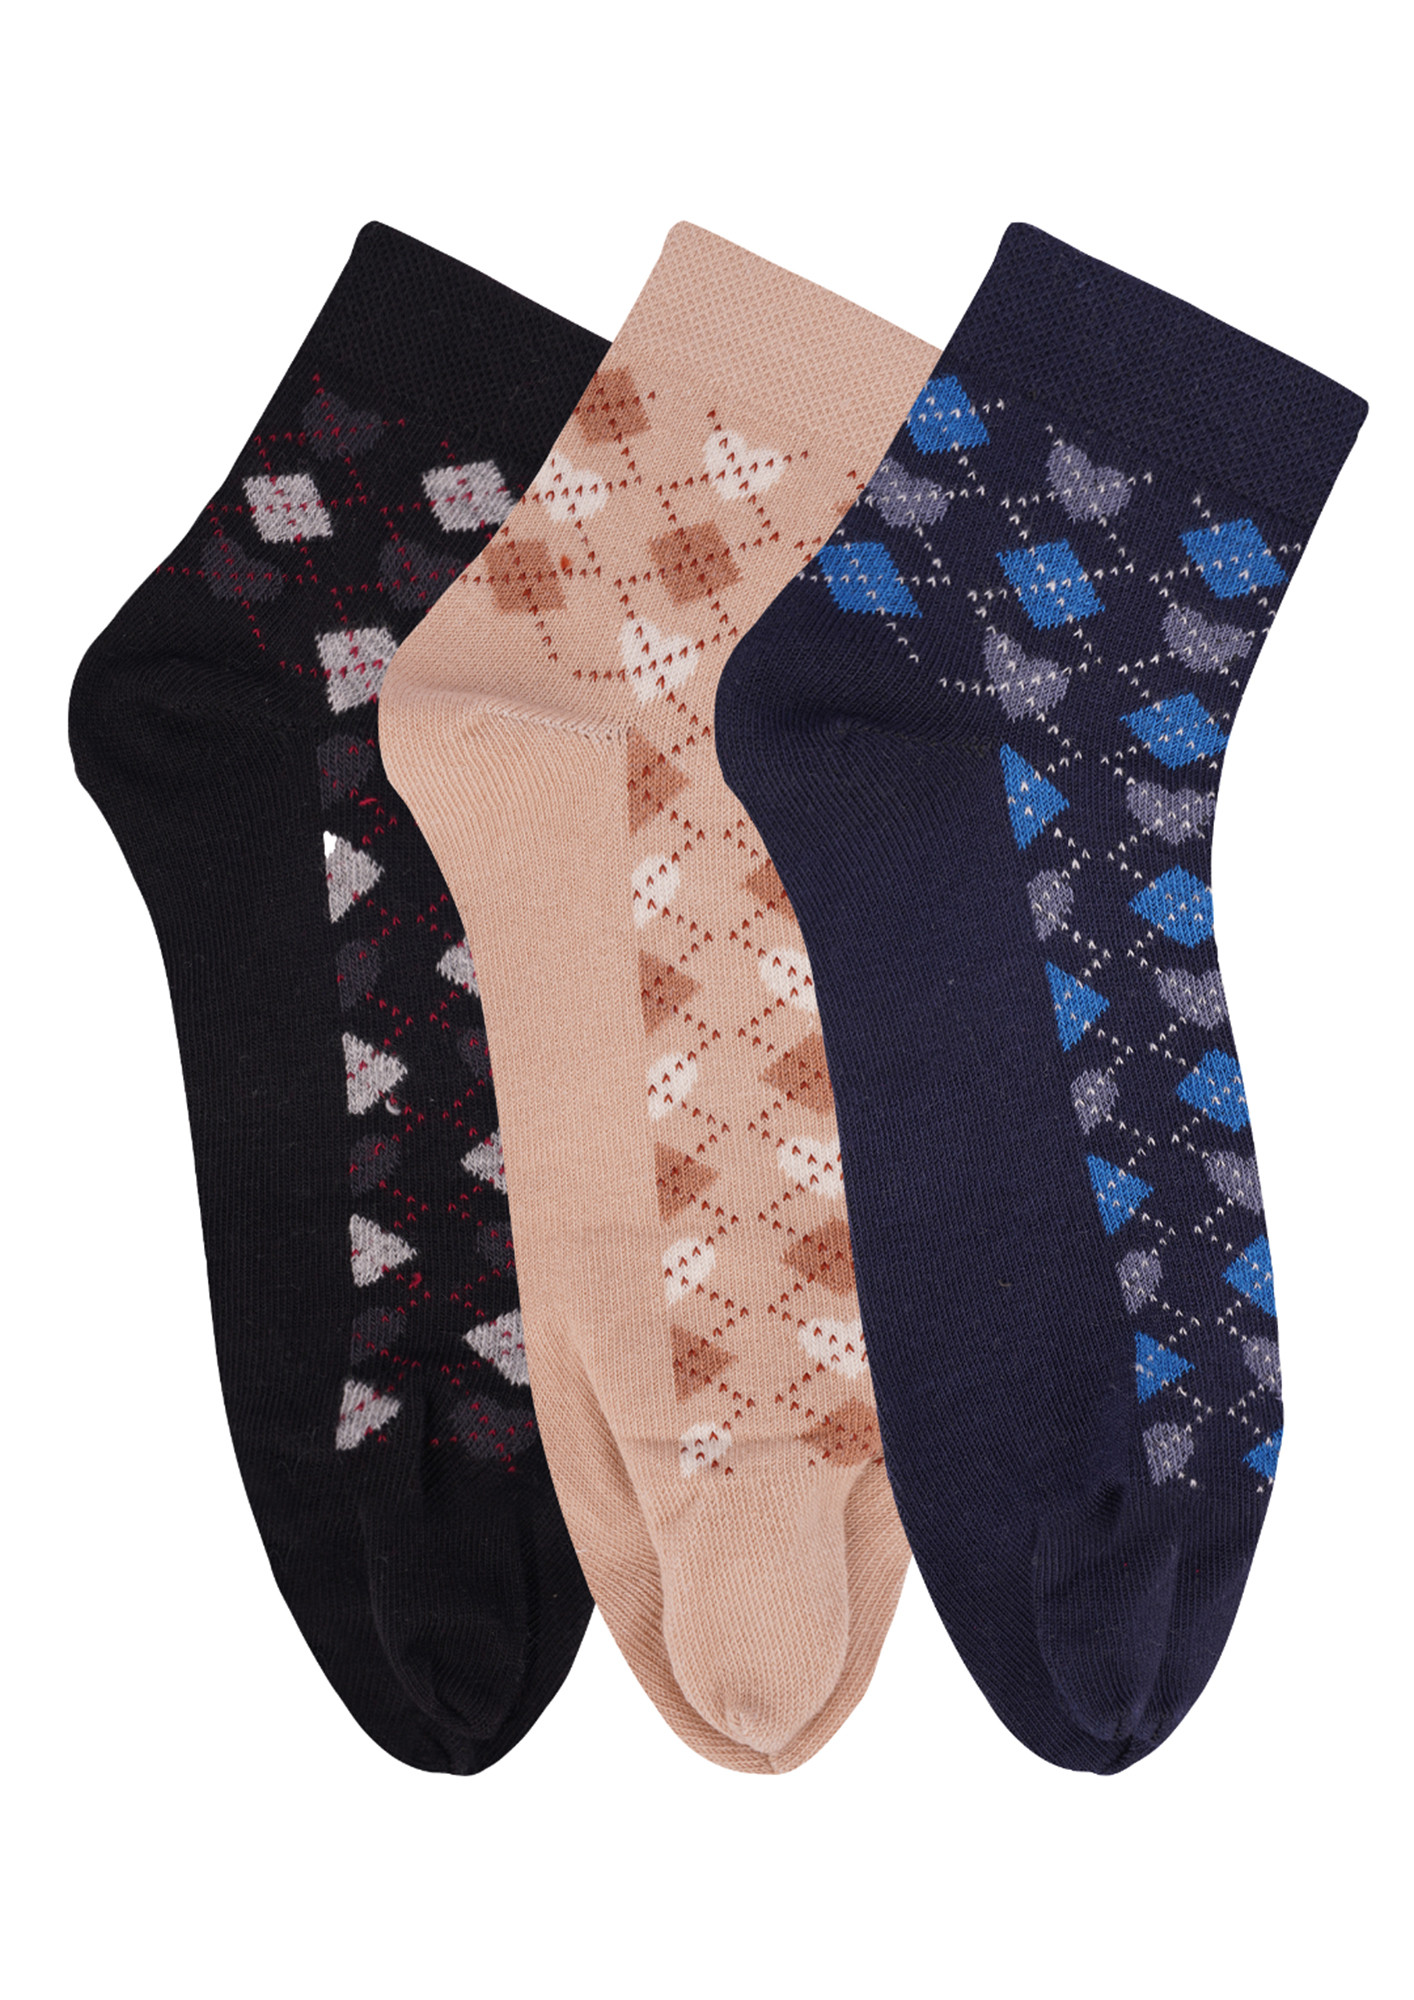 N2S NEXT2SKIN Women's Low Ankle Length Cotton Argyle Pattern Thumb Socks (Pack of 3) (Black:Skin:Navy)